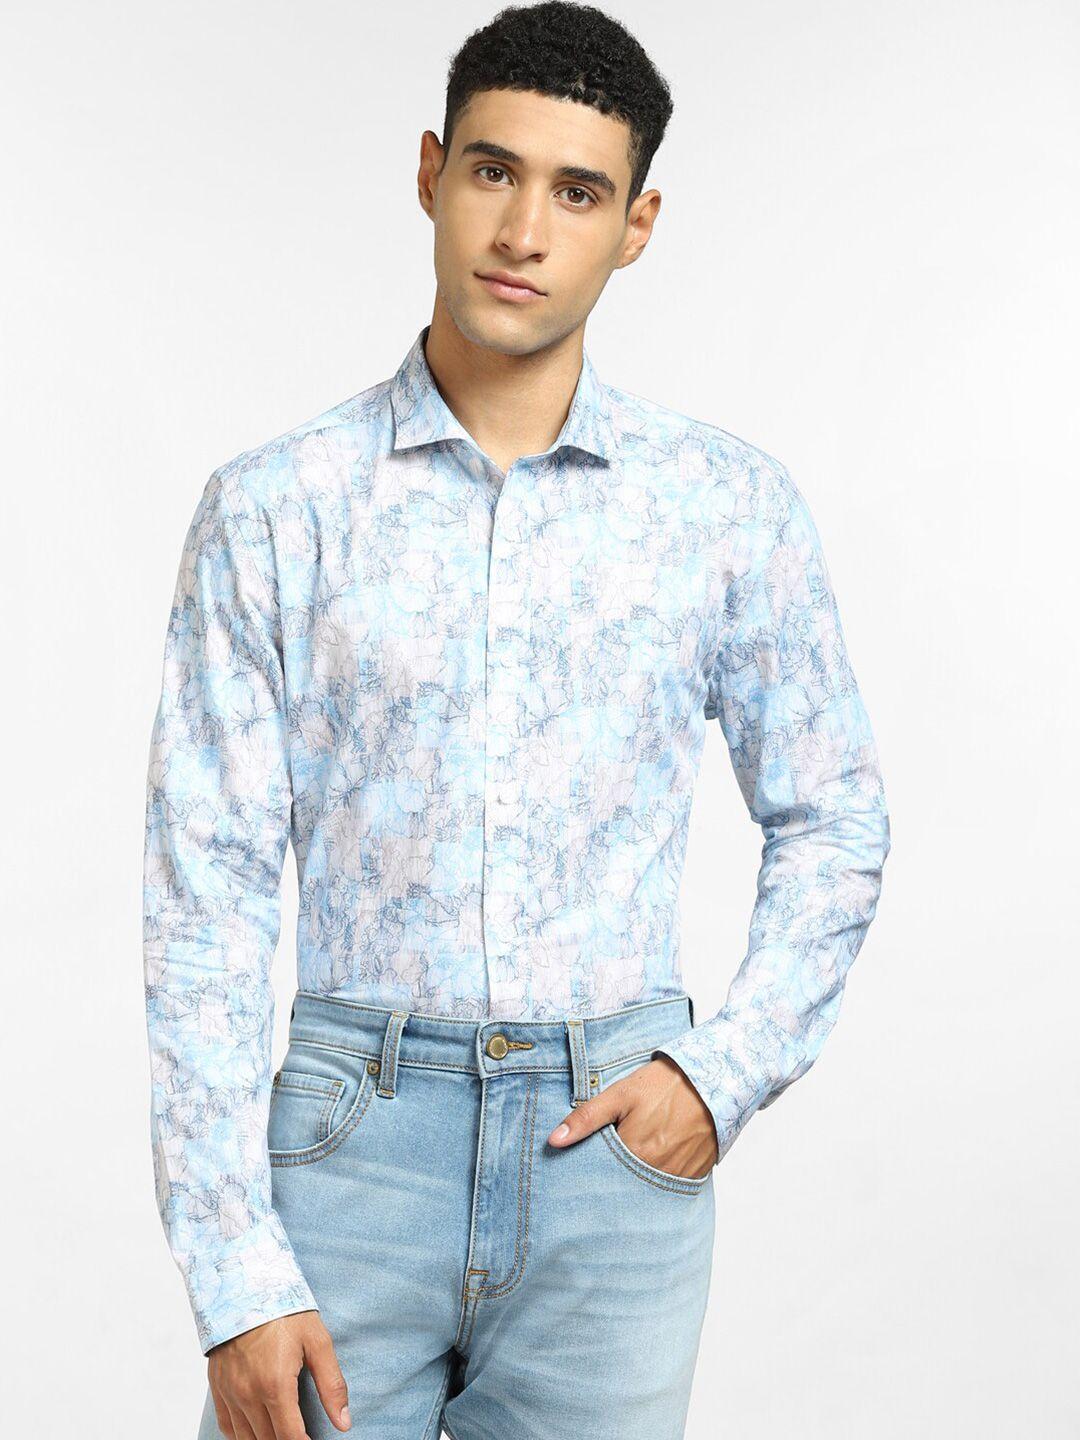 jack & jones men white & blue printed cotton casual shirt